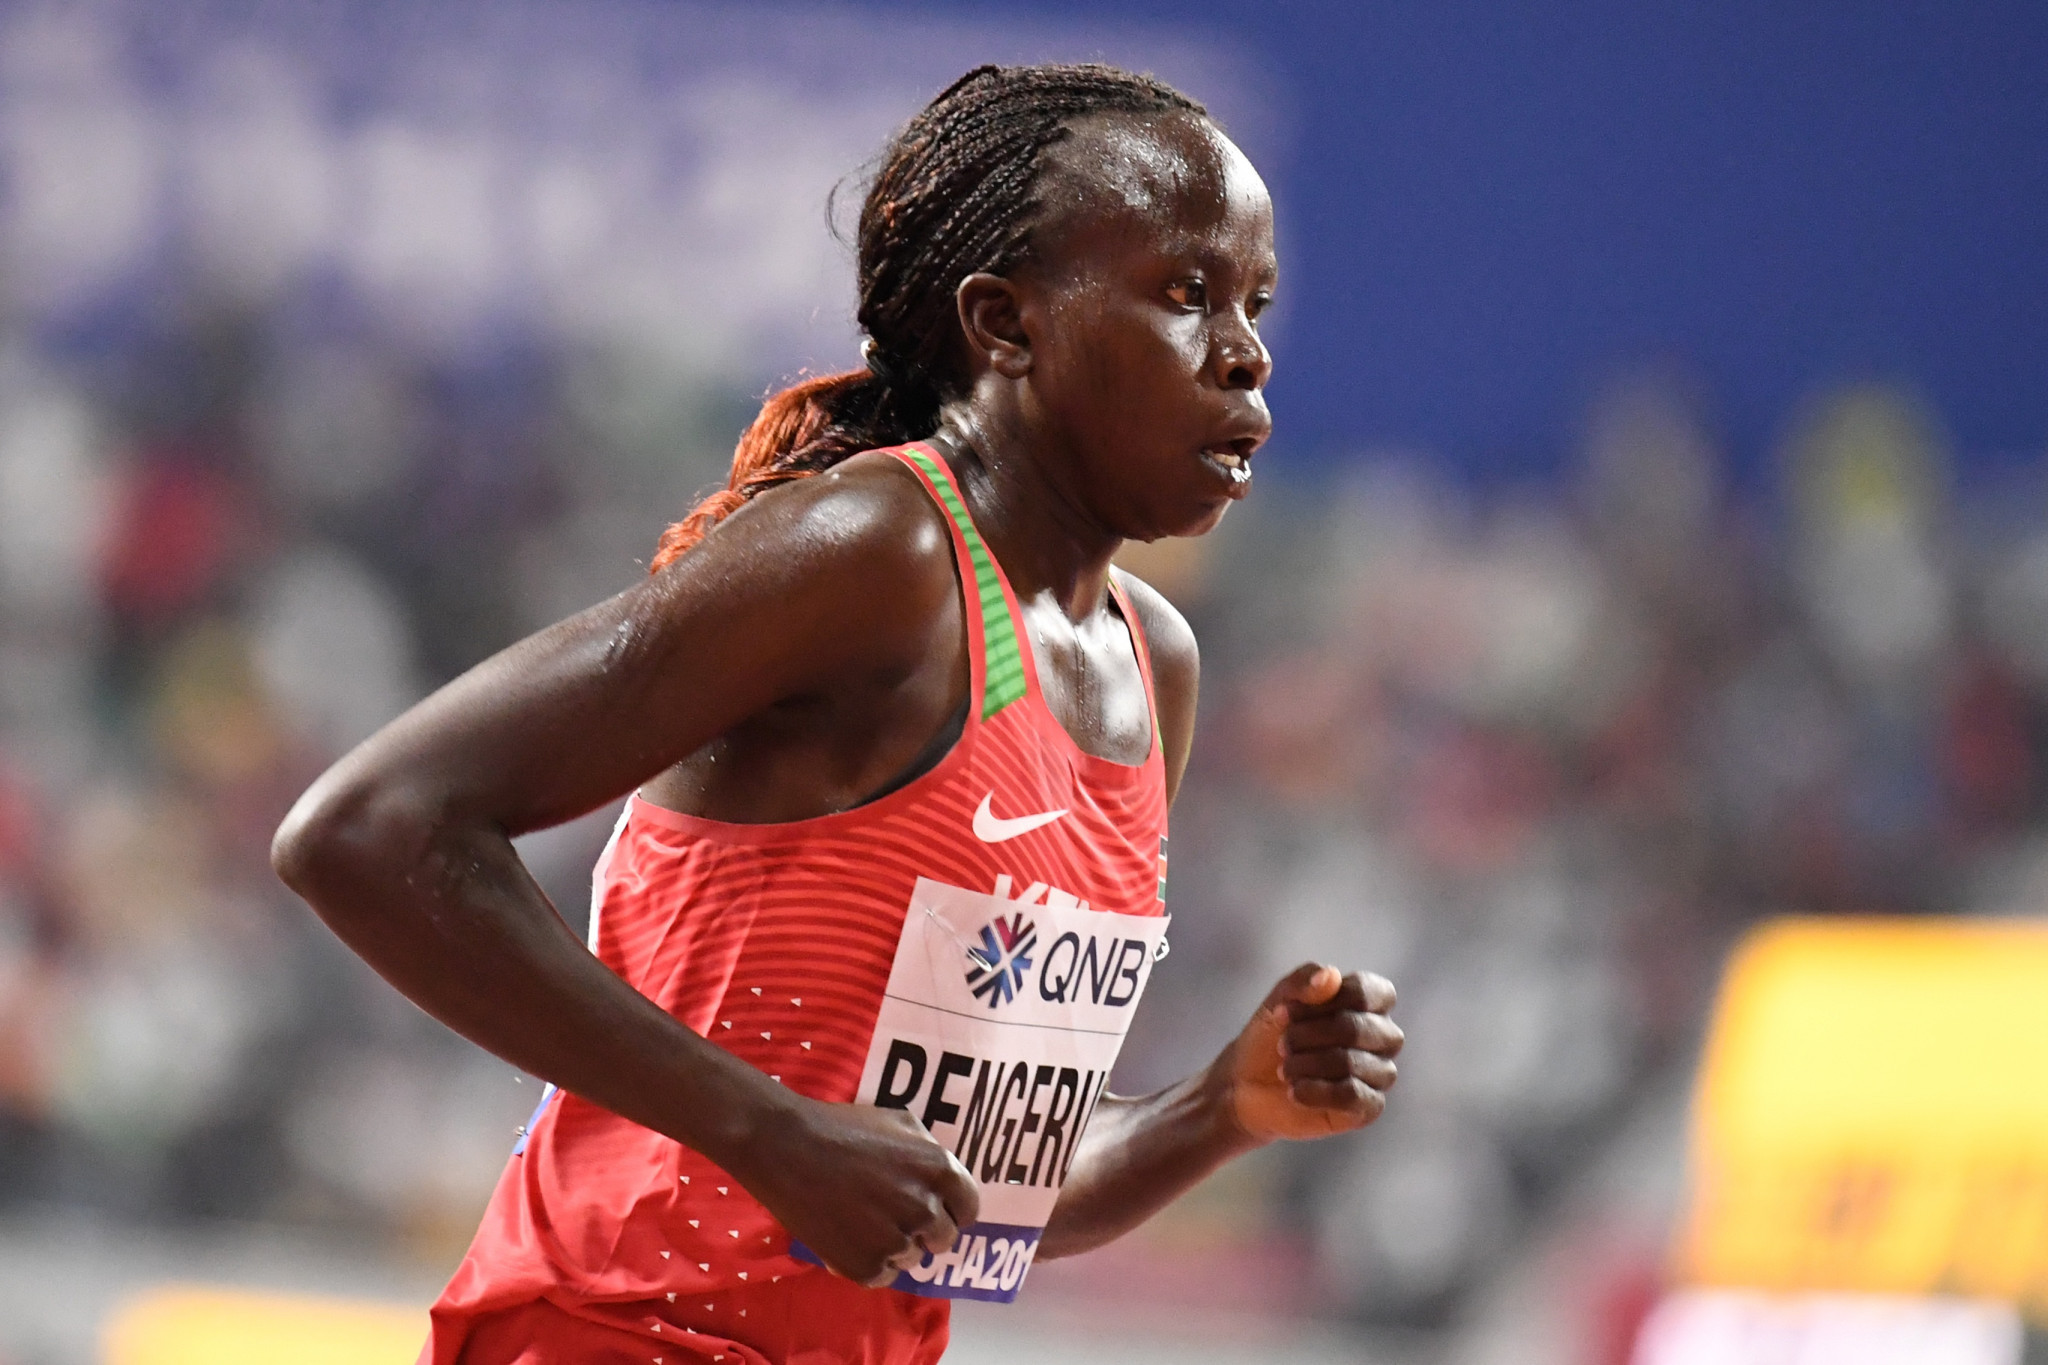 Rengeruk latest Kenyan to be suspended for doping violation